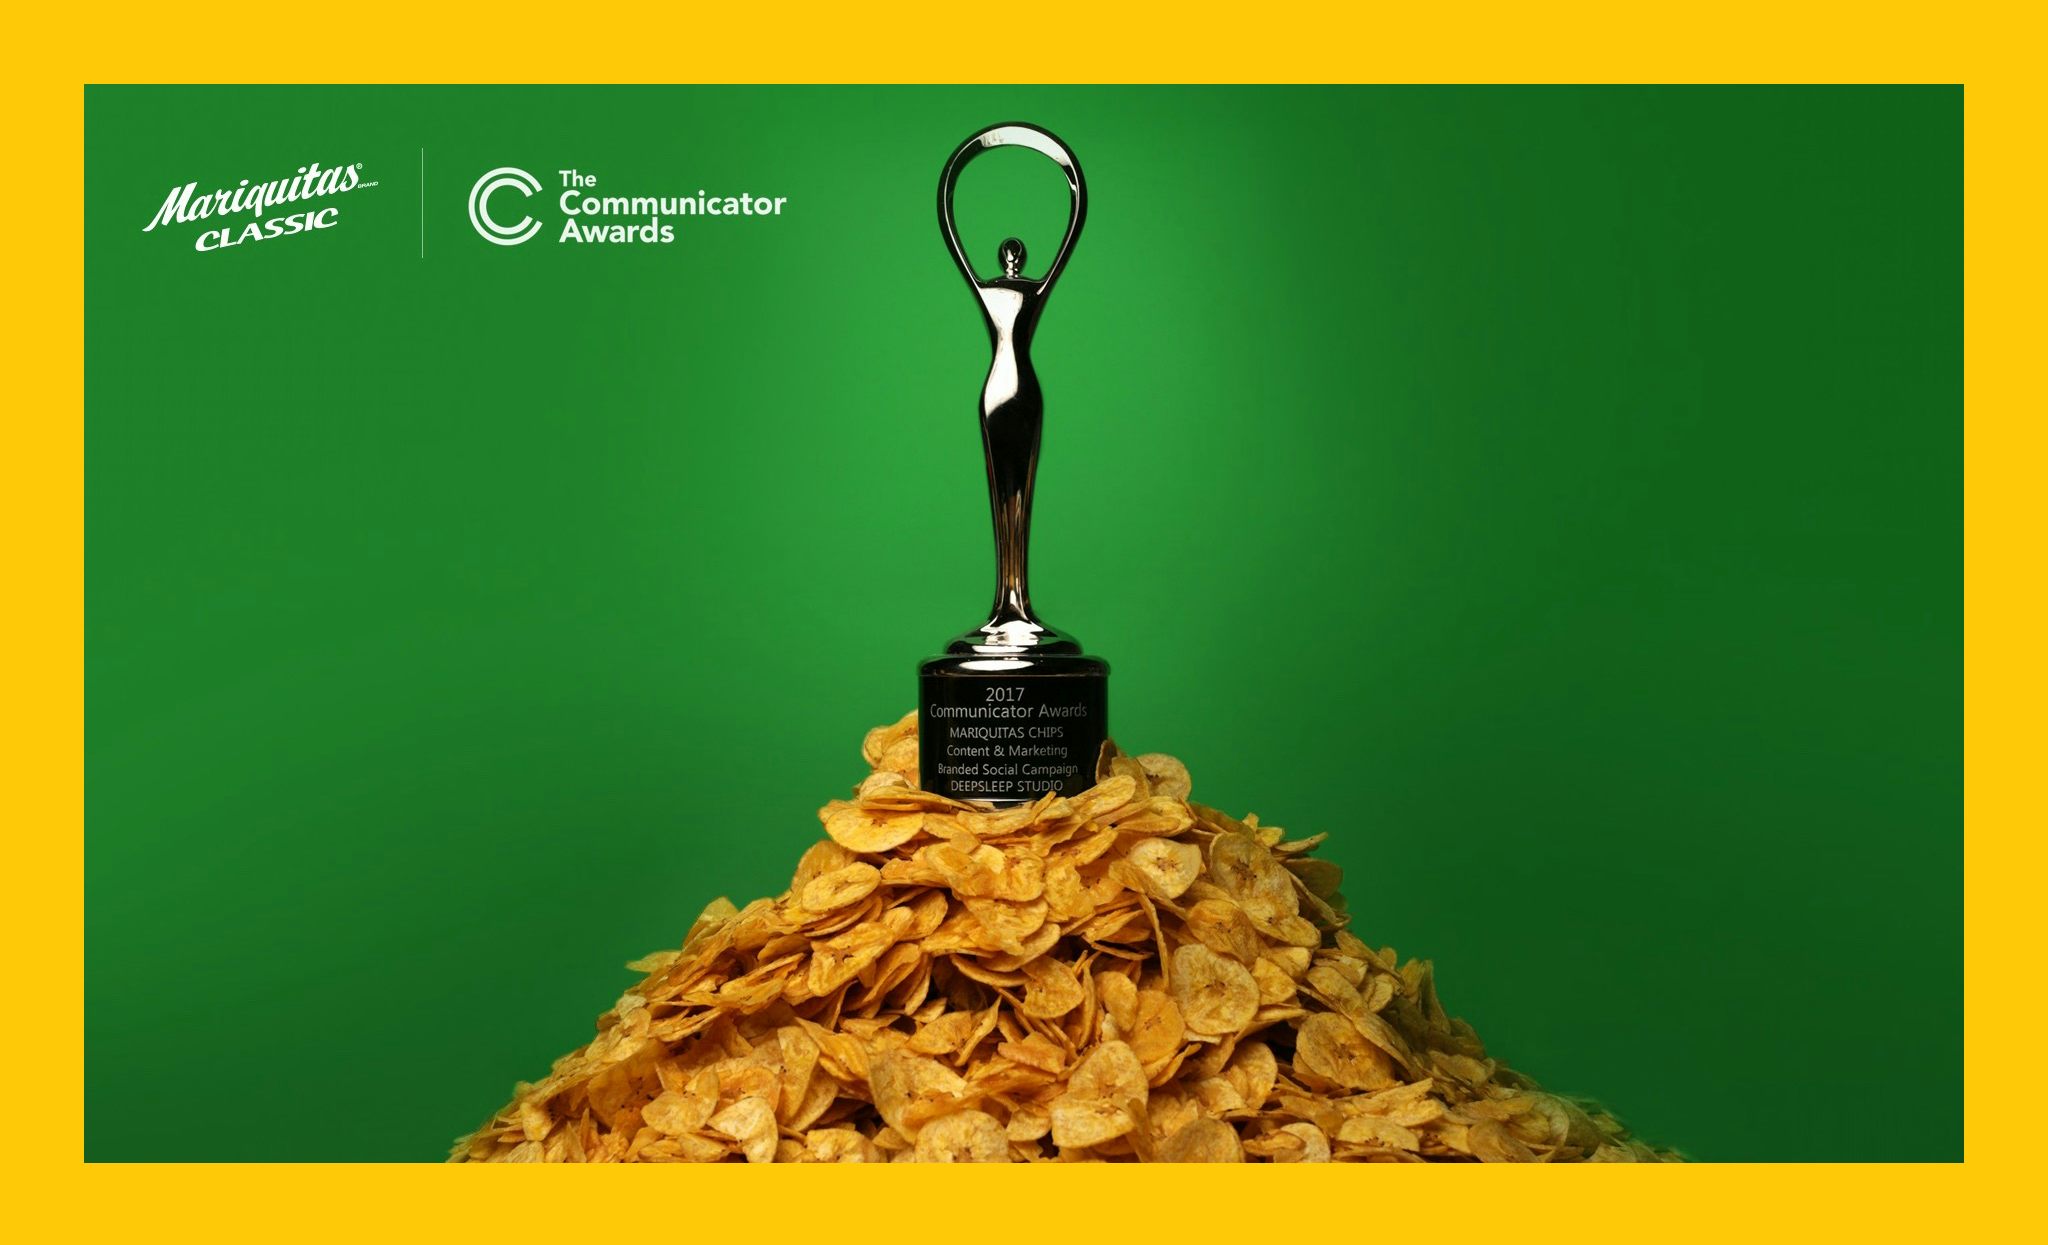 deep-sleep-studio-mariquitas-chips-communicator-award